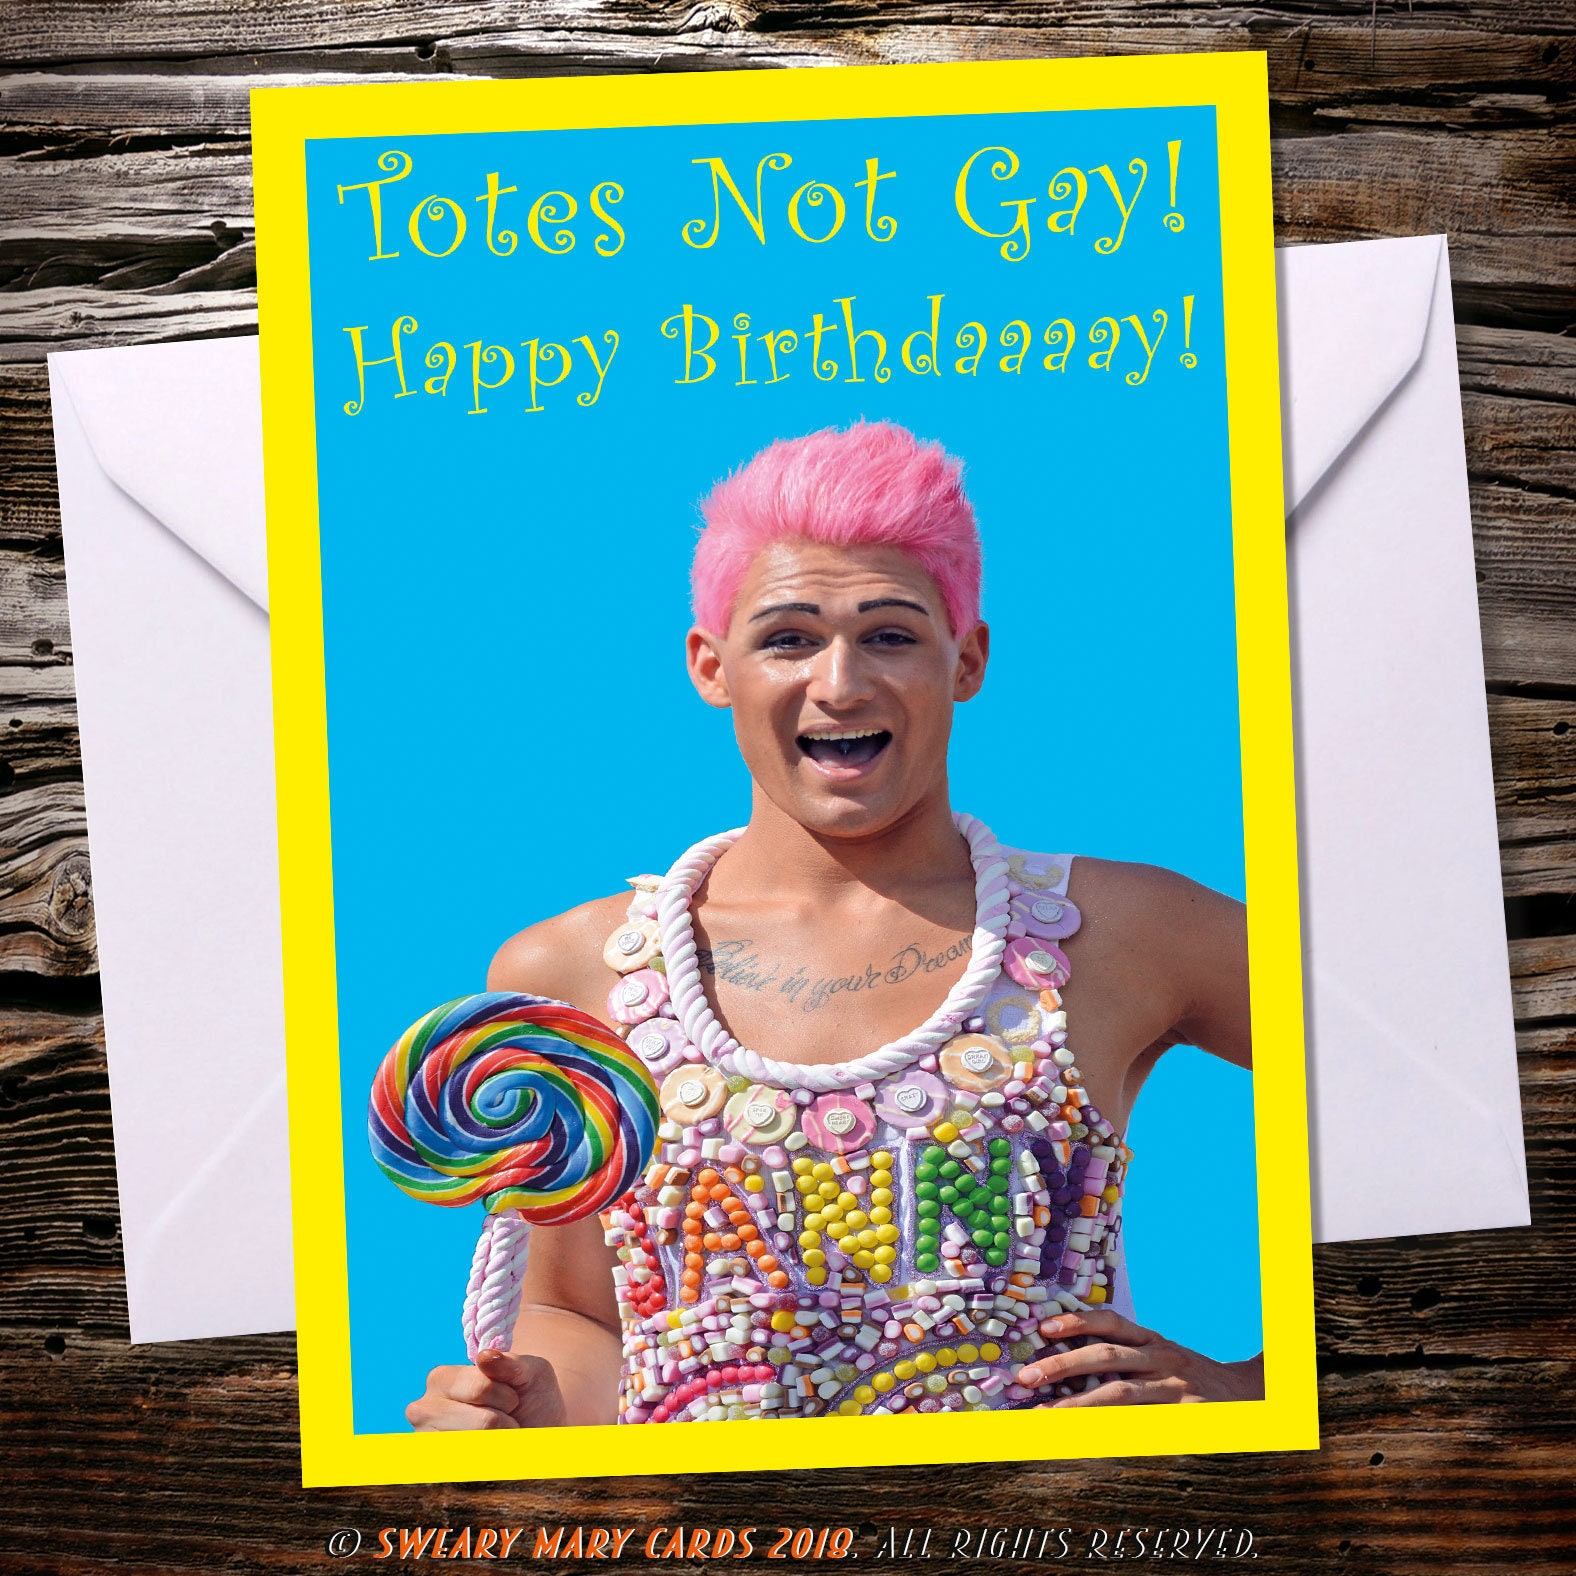 totally-gay-birthday-card-funny-gay-birthday-greeting-etsy